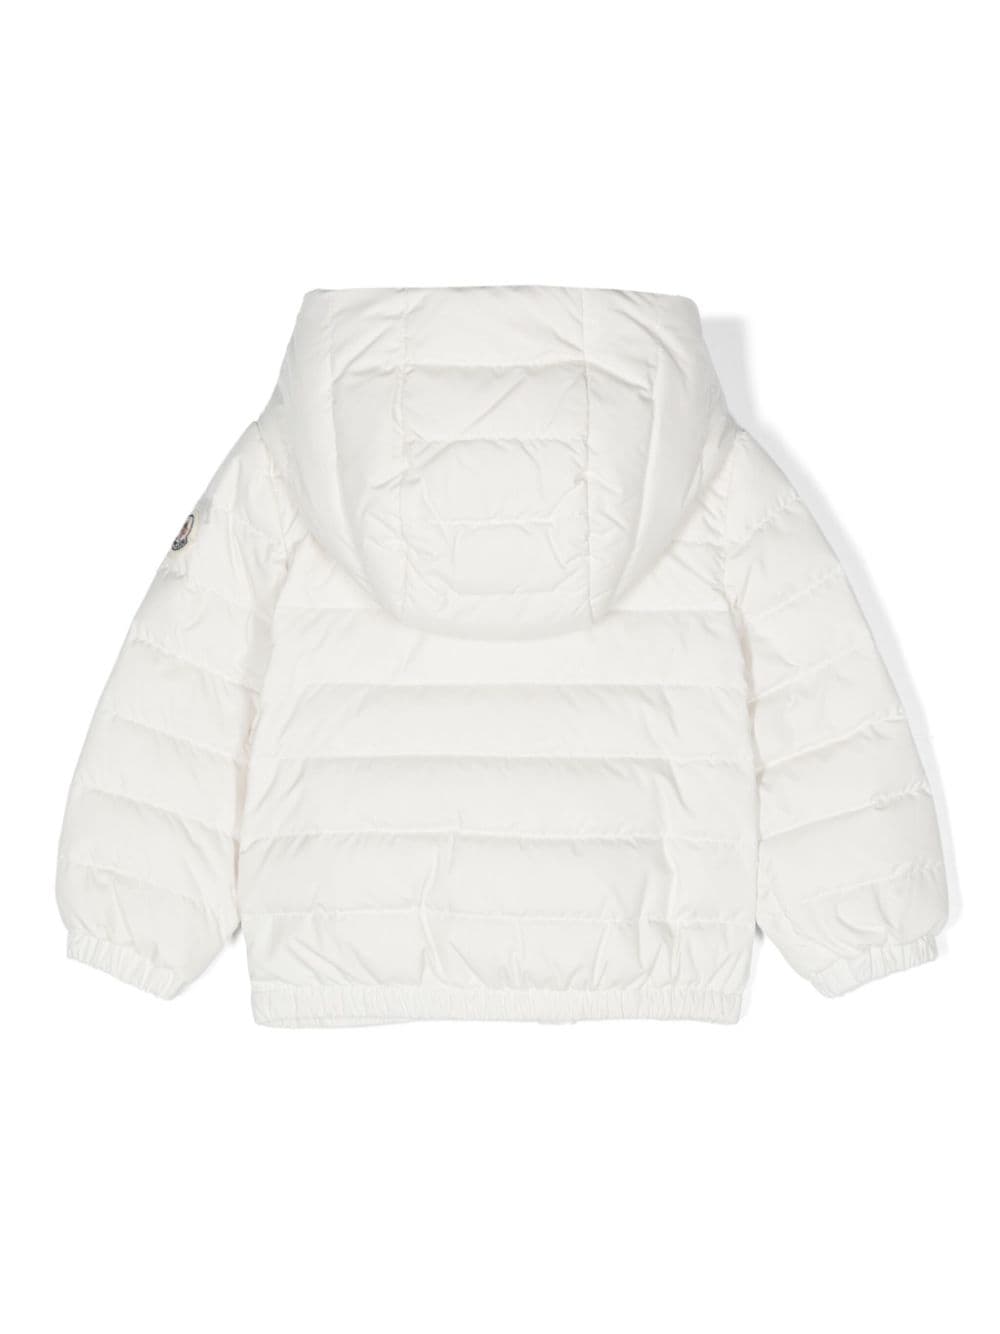 White Atsu jacket for newborns with logo